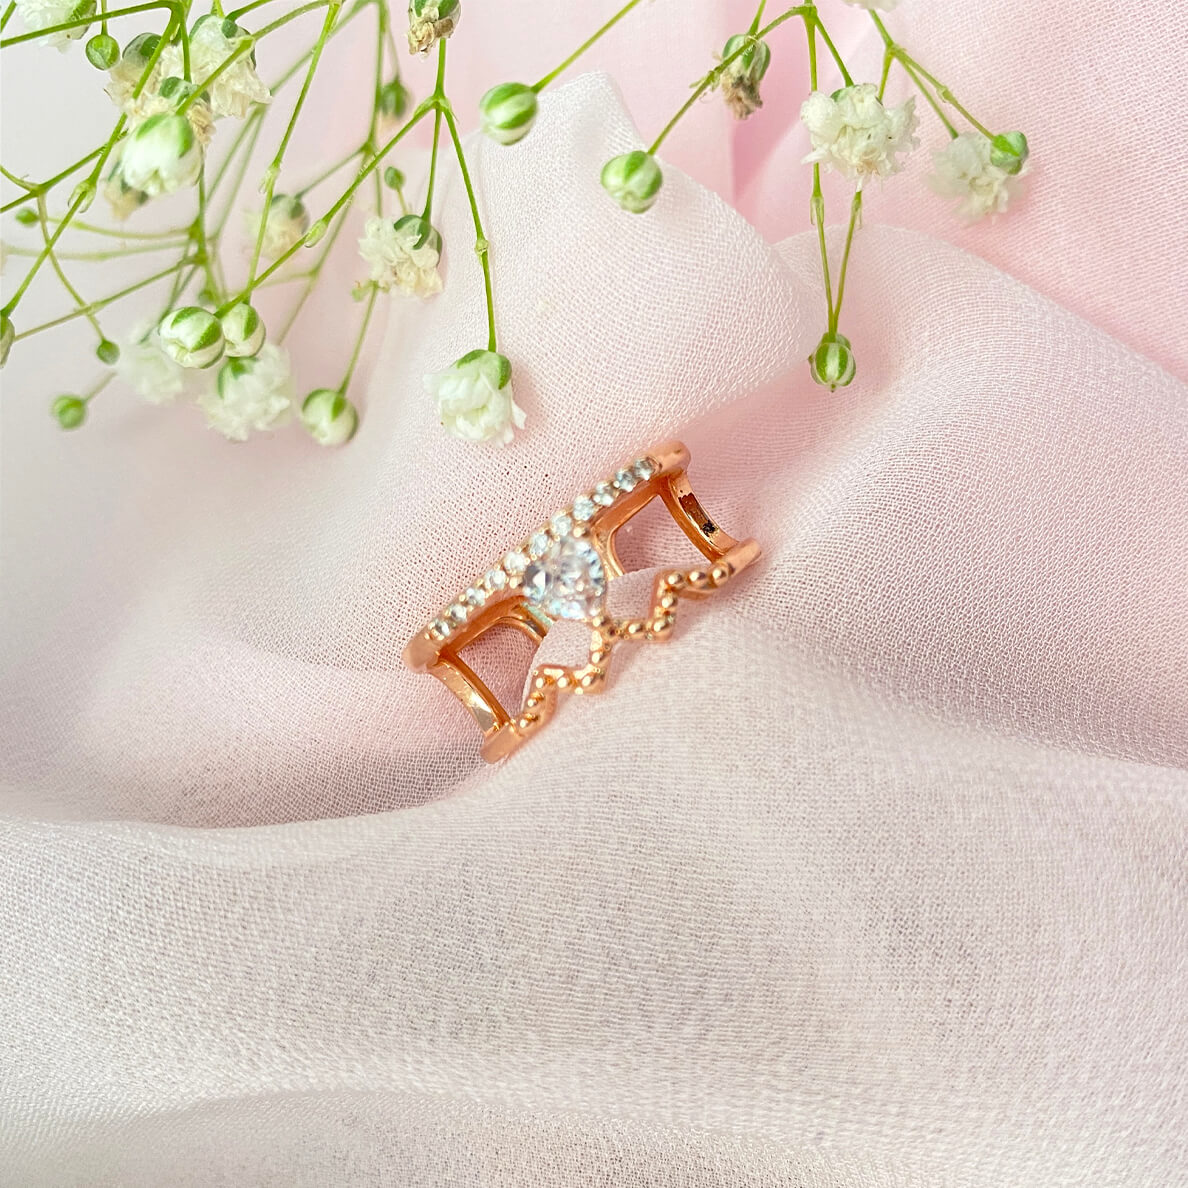 beautiful ring💖💗 | Rings for girls, Gold ring designs, Fashion rings